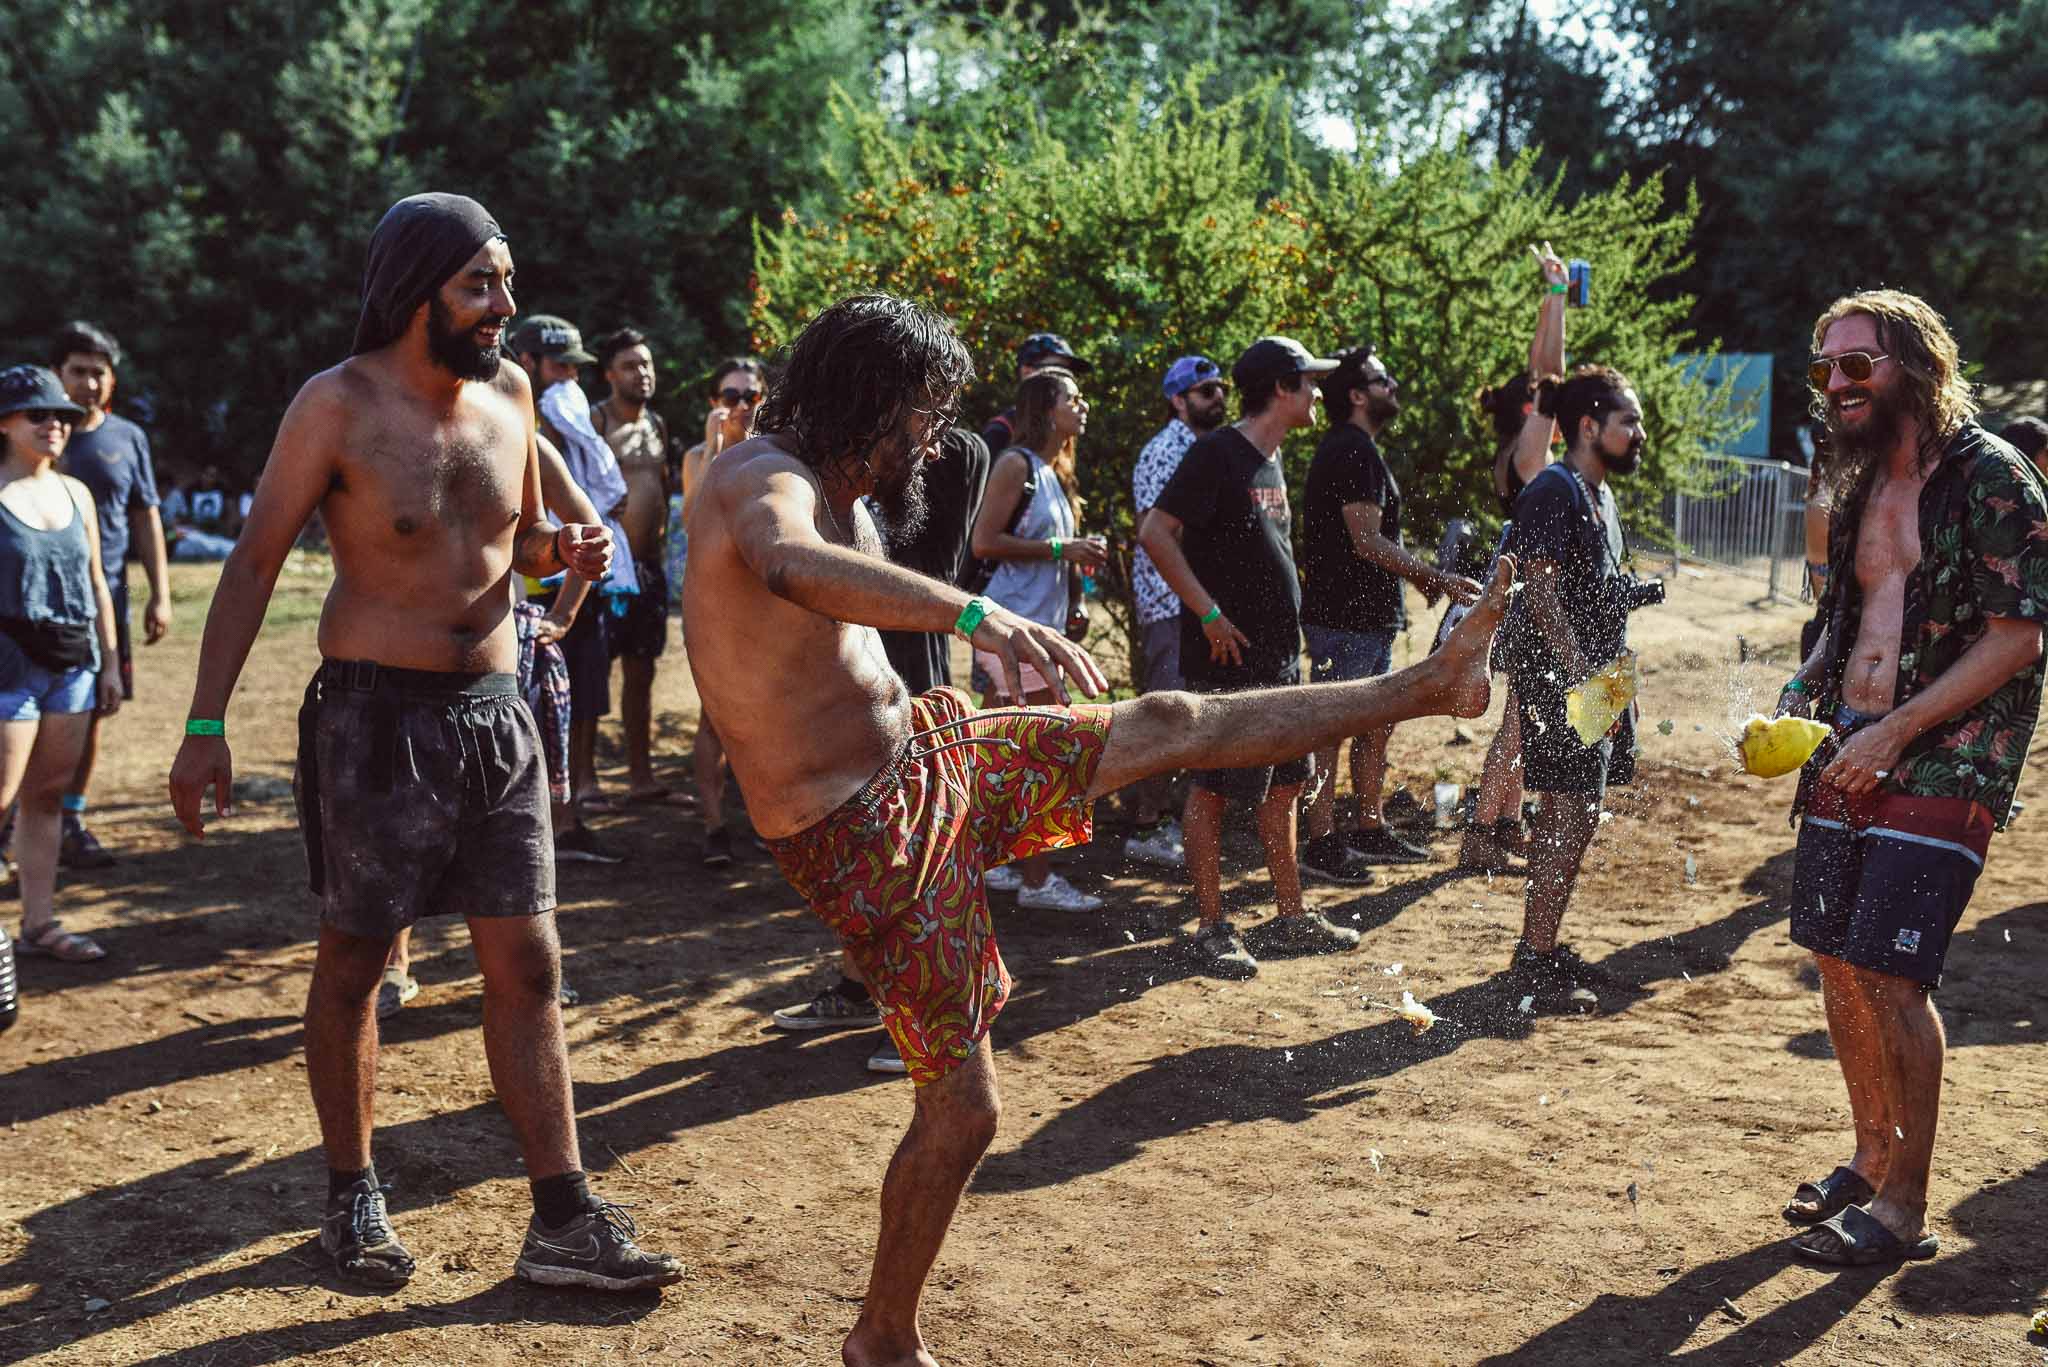 festival woodstaco-parral-diego mena fotografia